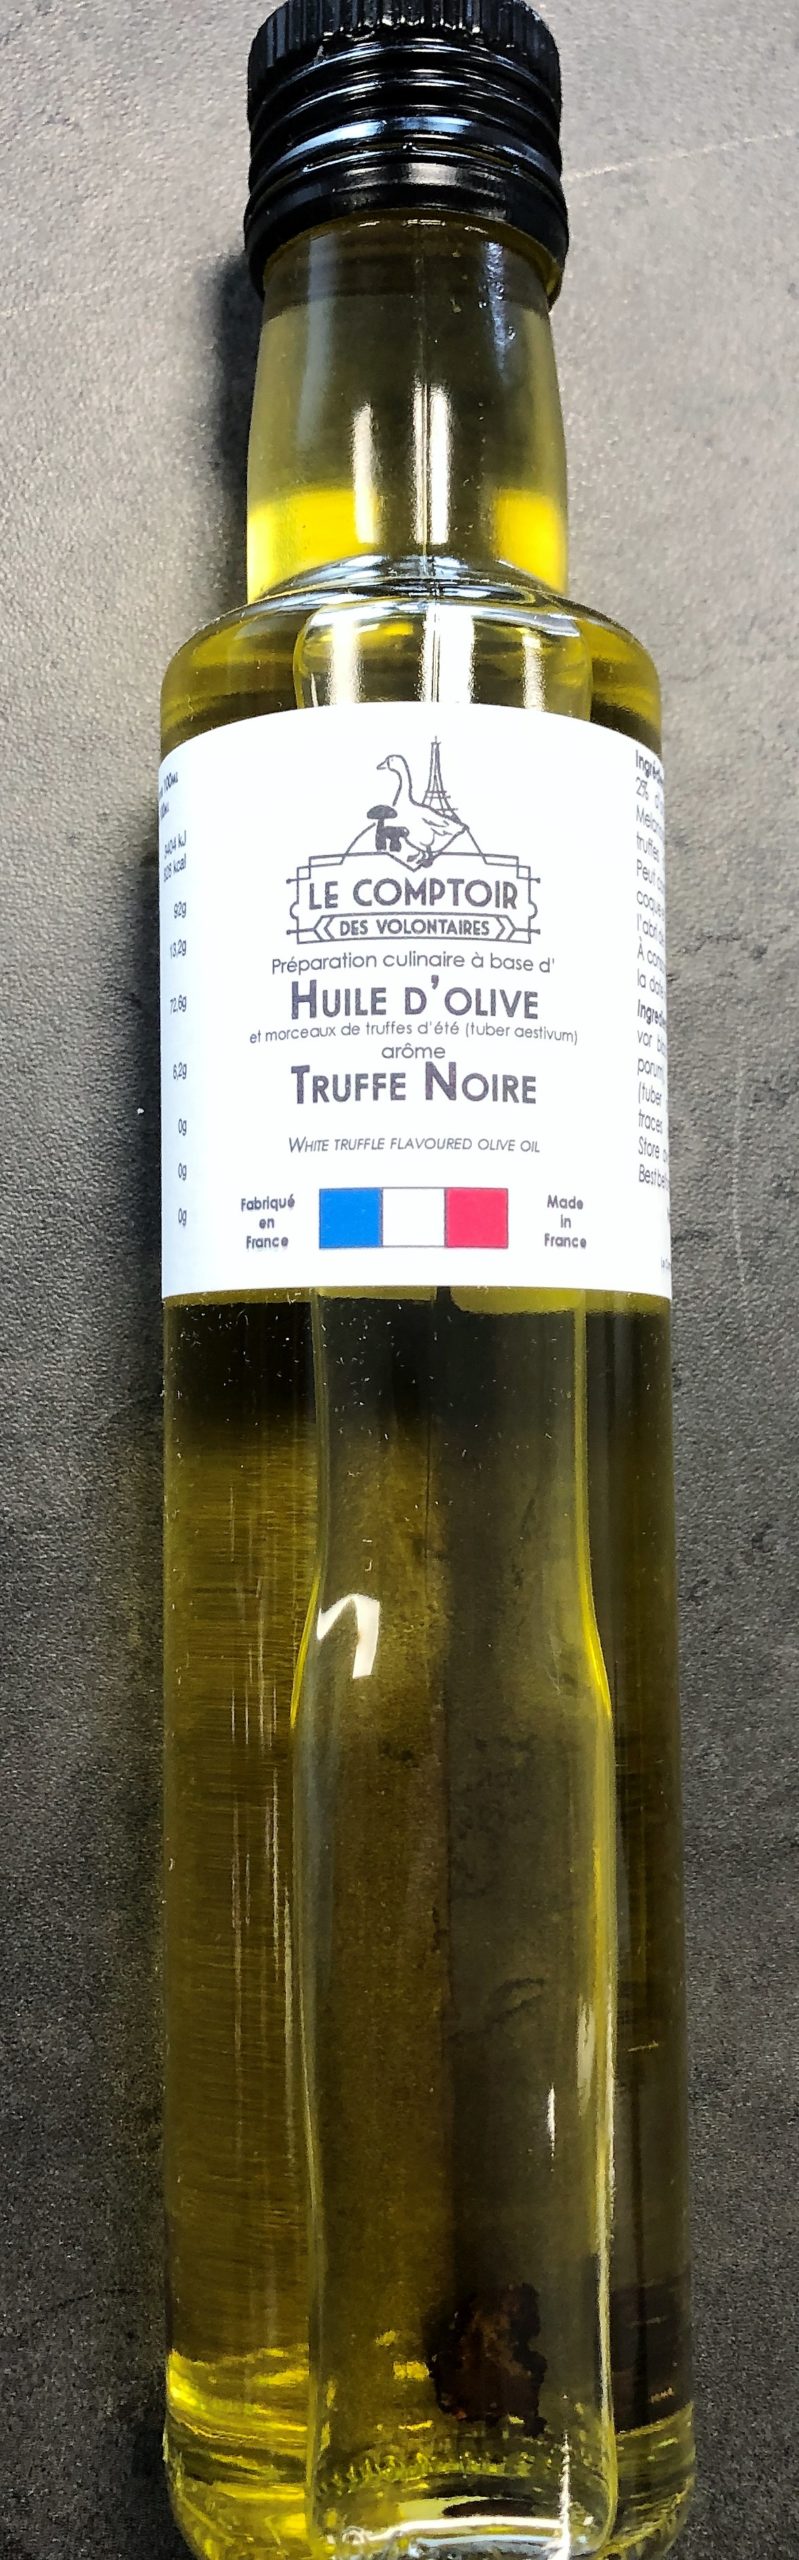 https://palmiloire.fr/wp-content/uploads/2020/04/huile-olive-truffe-noire-scaled.jpg